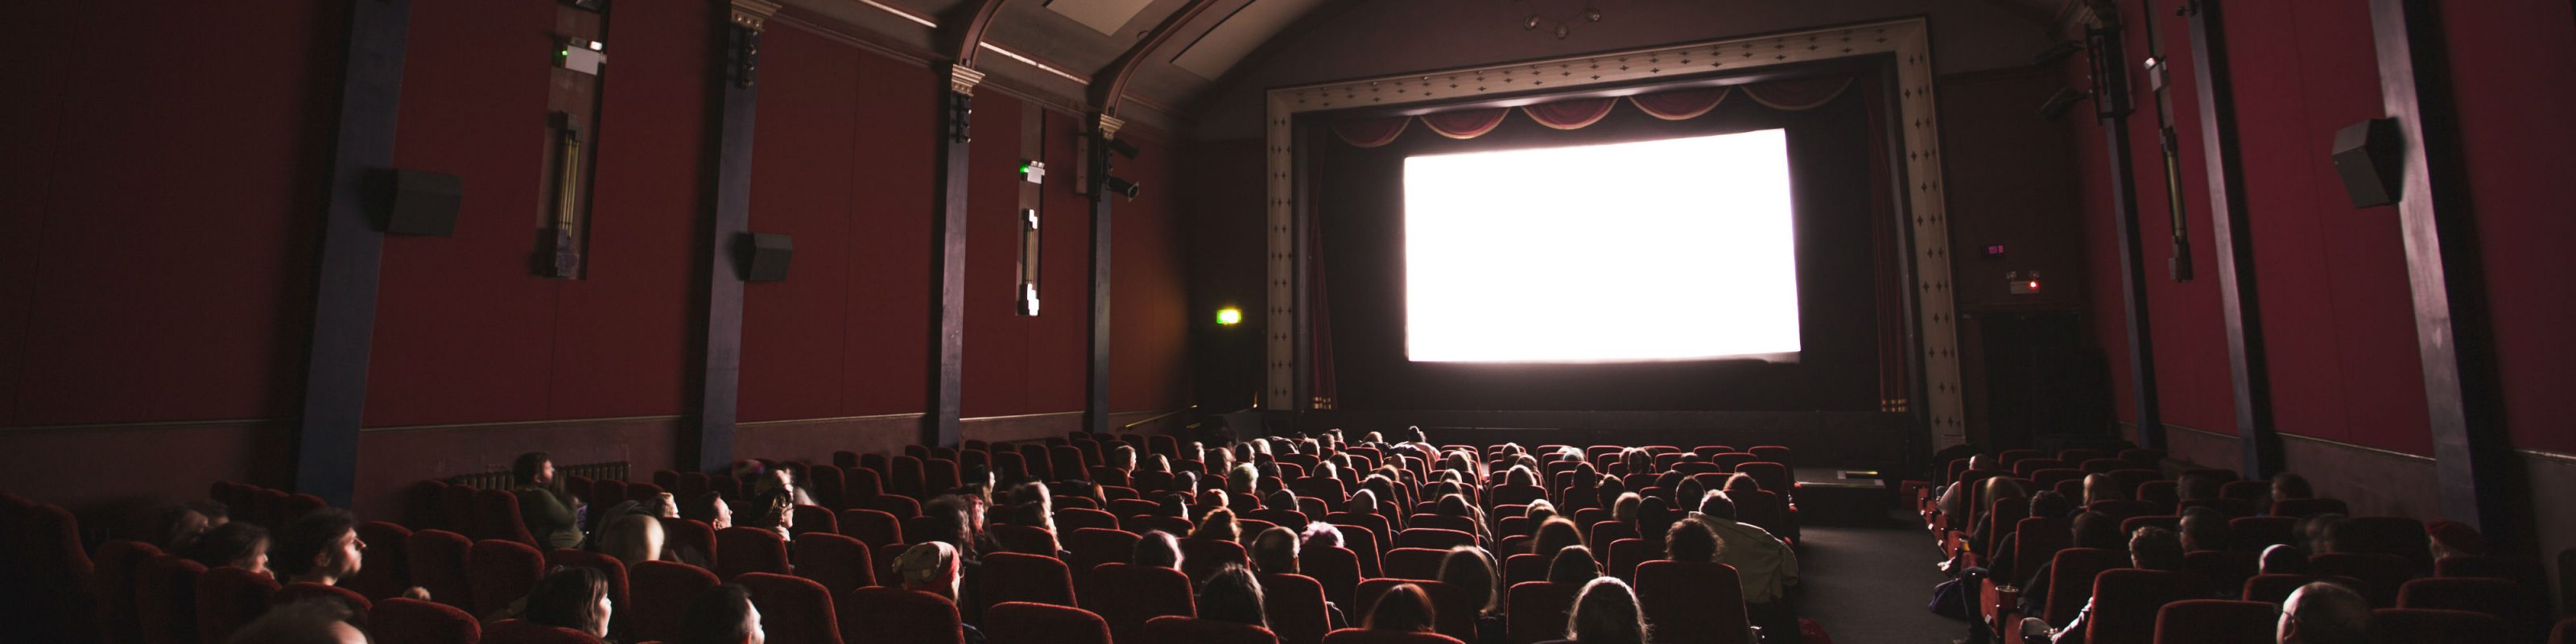 Inside of a cinema